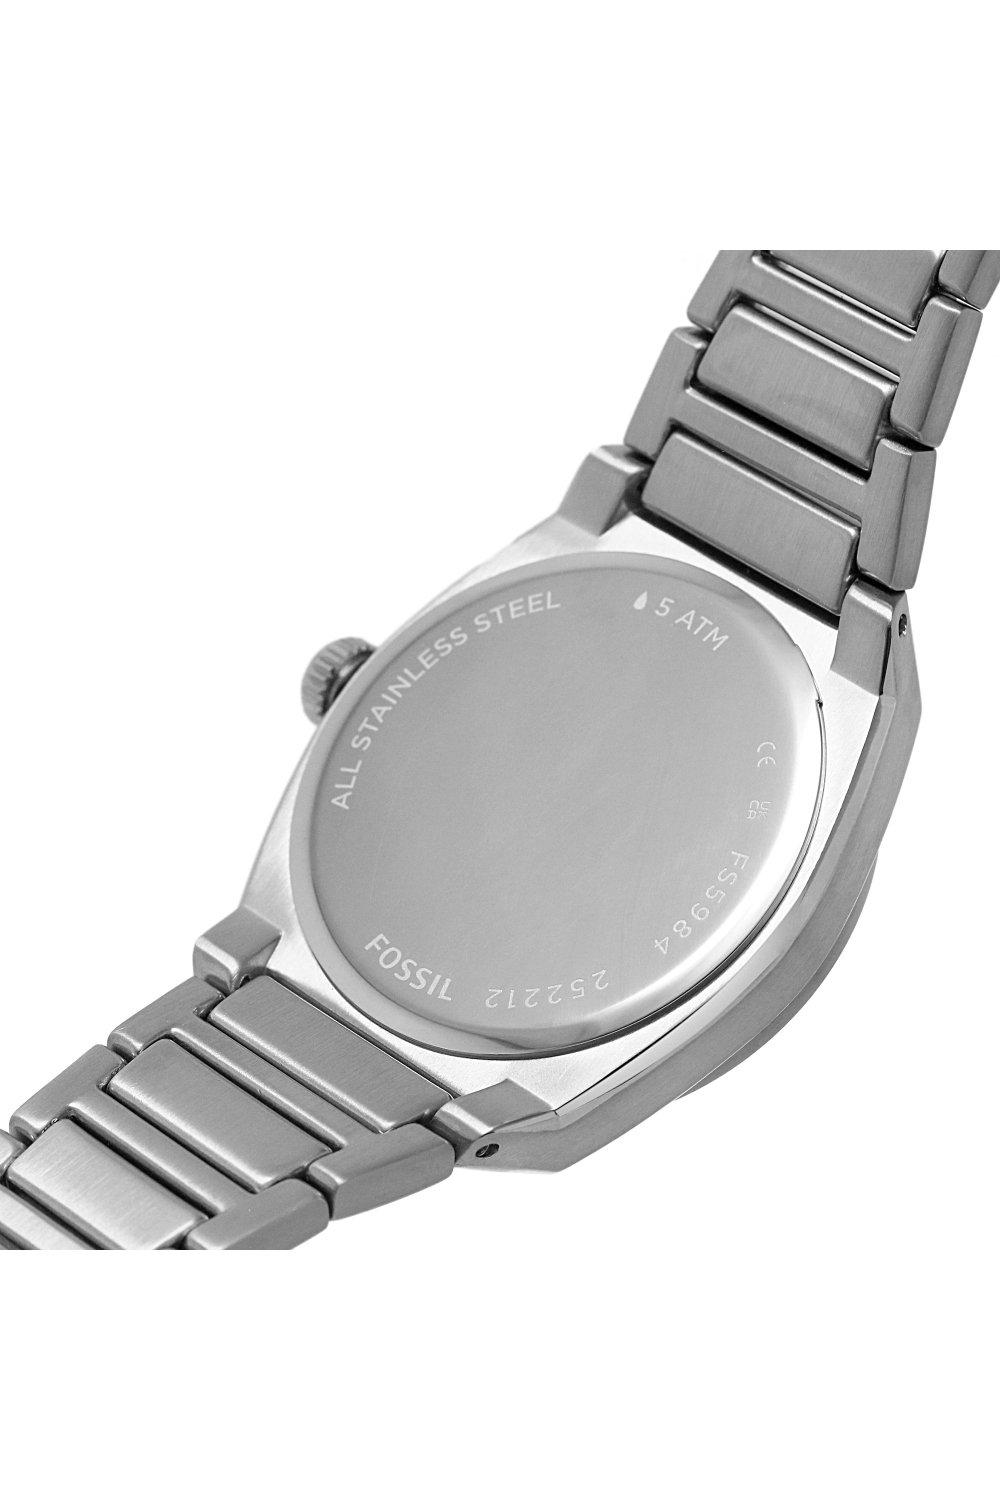 Watches | Everett Stainless Fs5984 | Analogue - Fossil Watch Steel Quartz Fashion